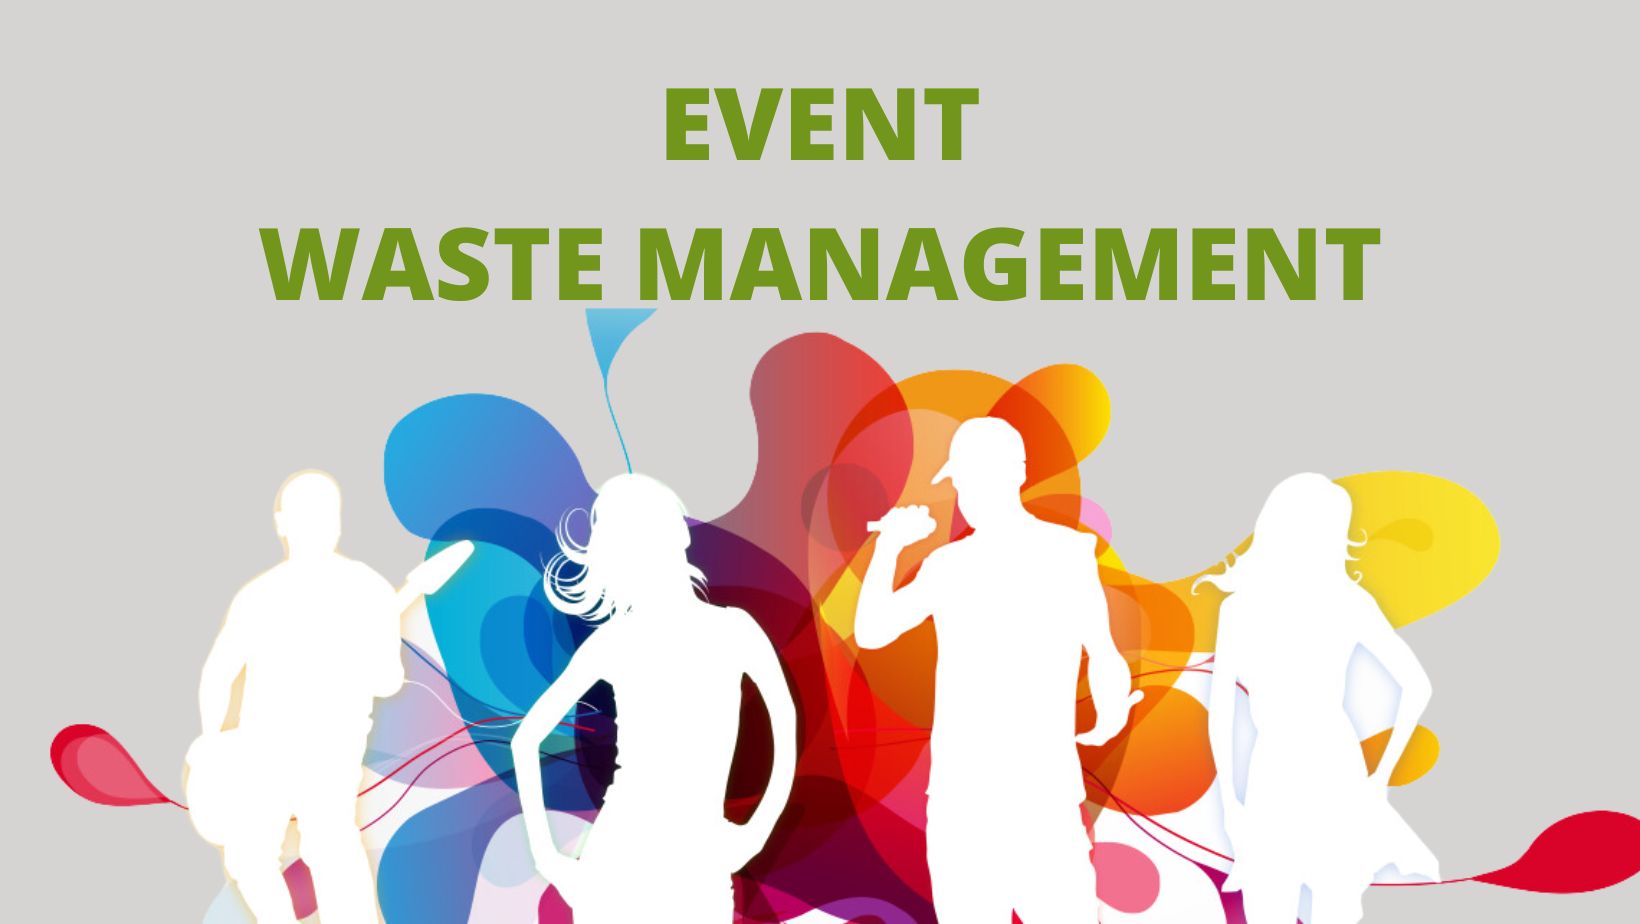 Event waste management